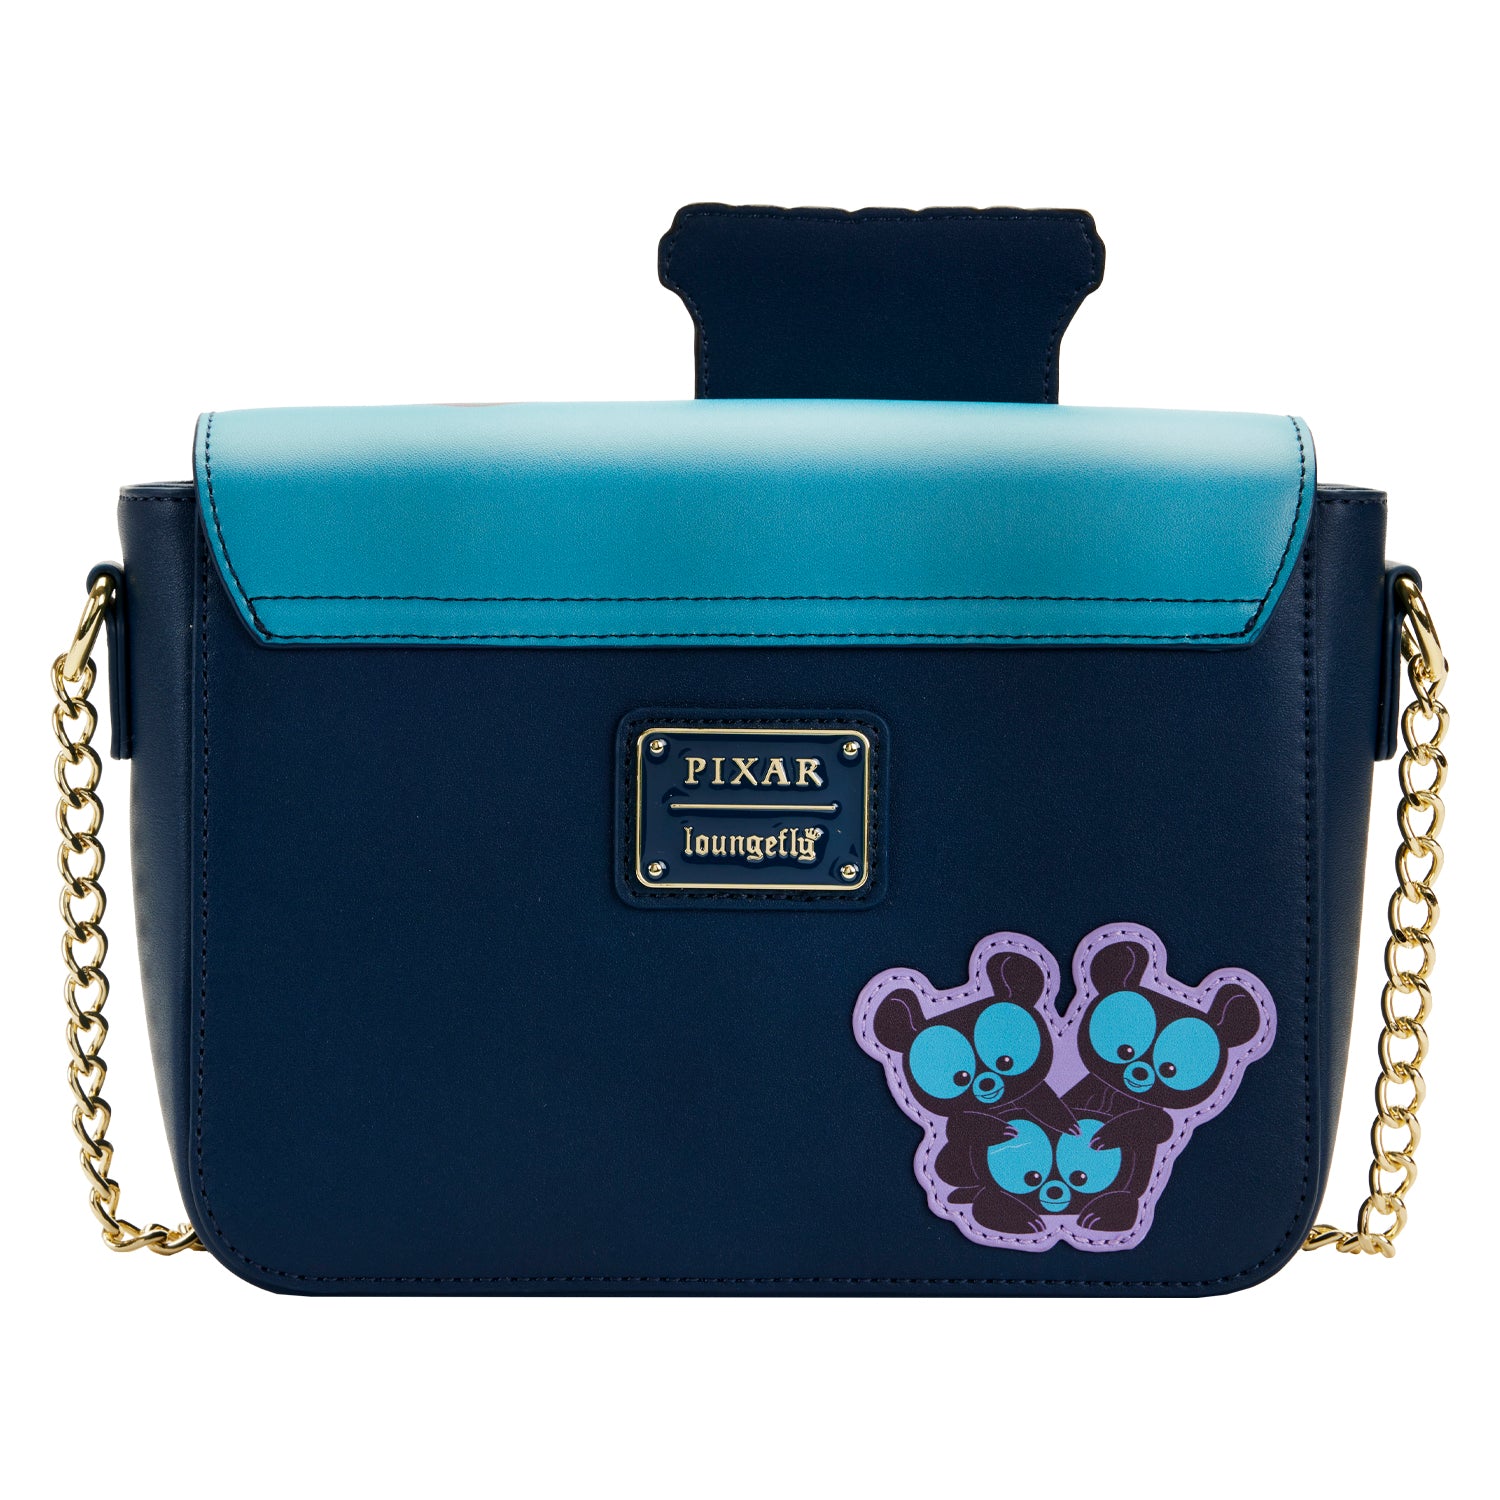 chanel handbag authentic new